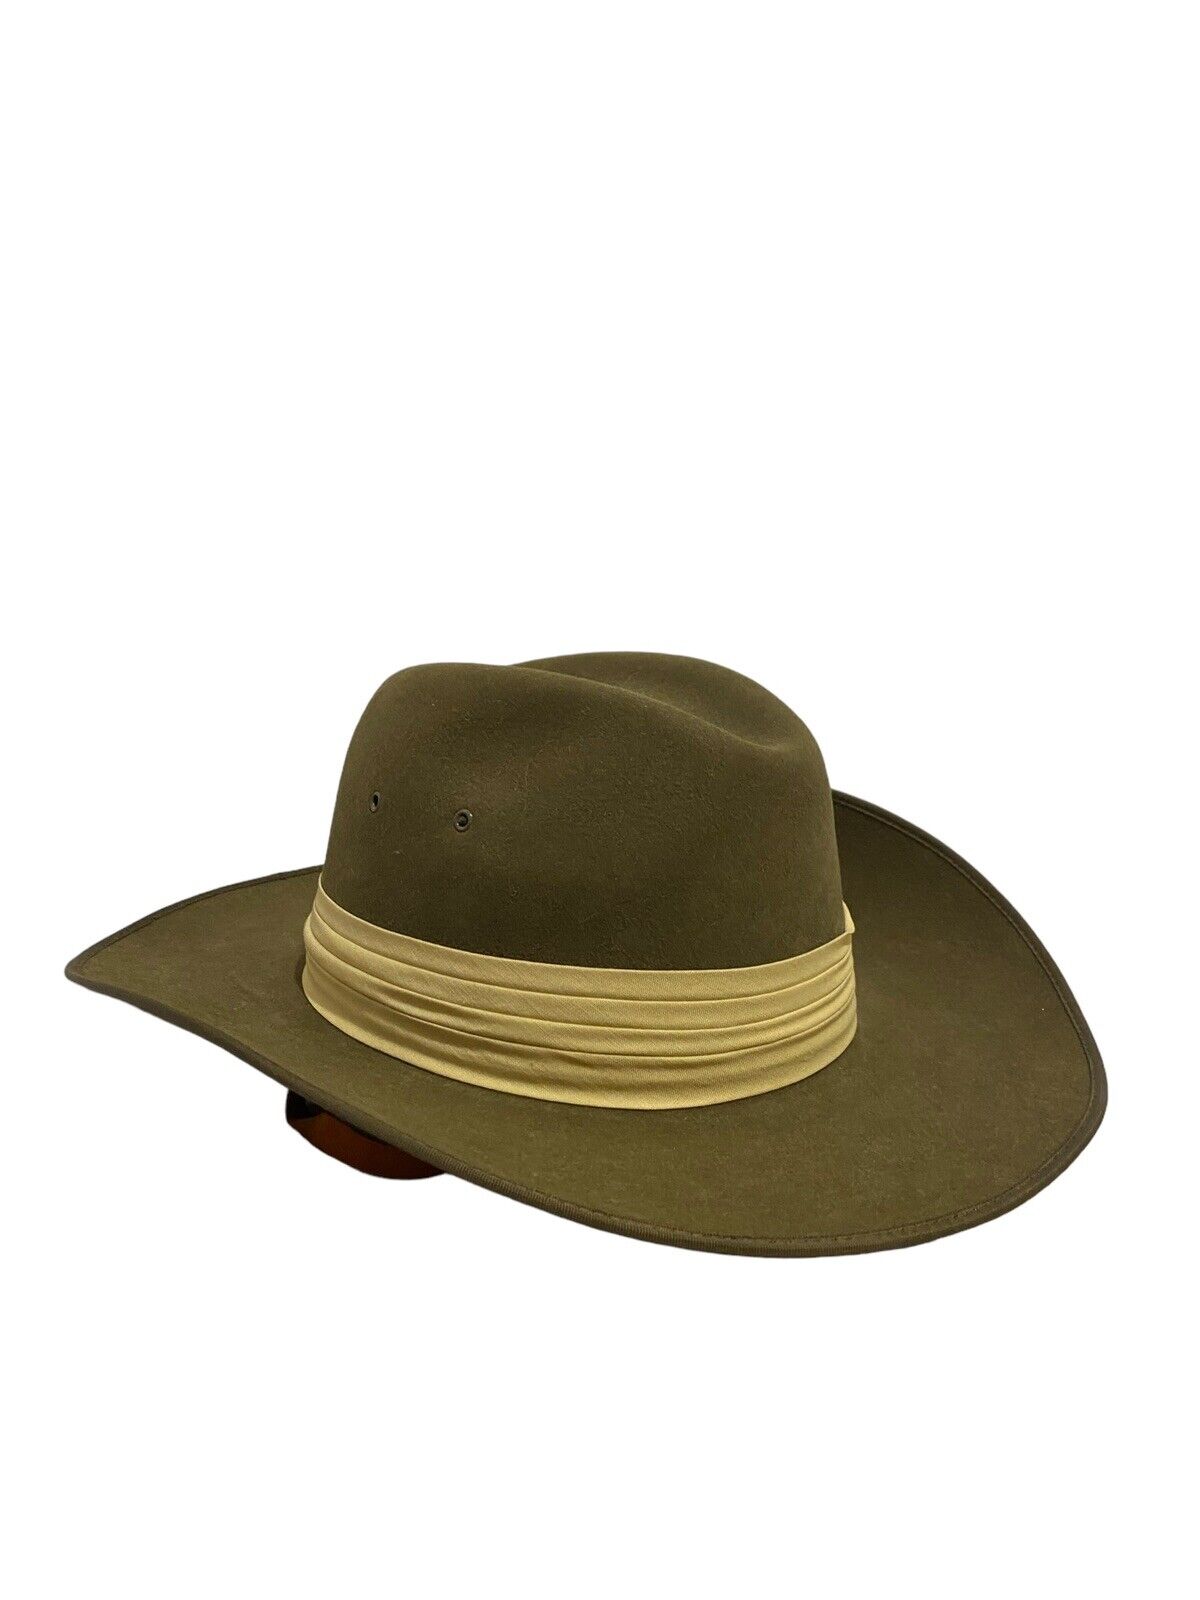 Vintage Akubra Australian Army Slouch Digger Bush Military Hat Anzac Size 61